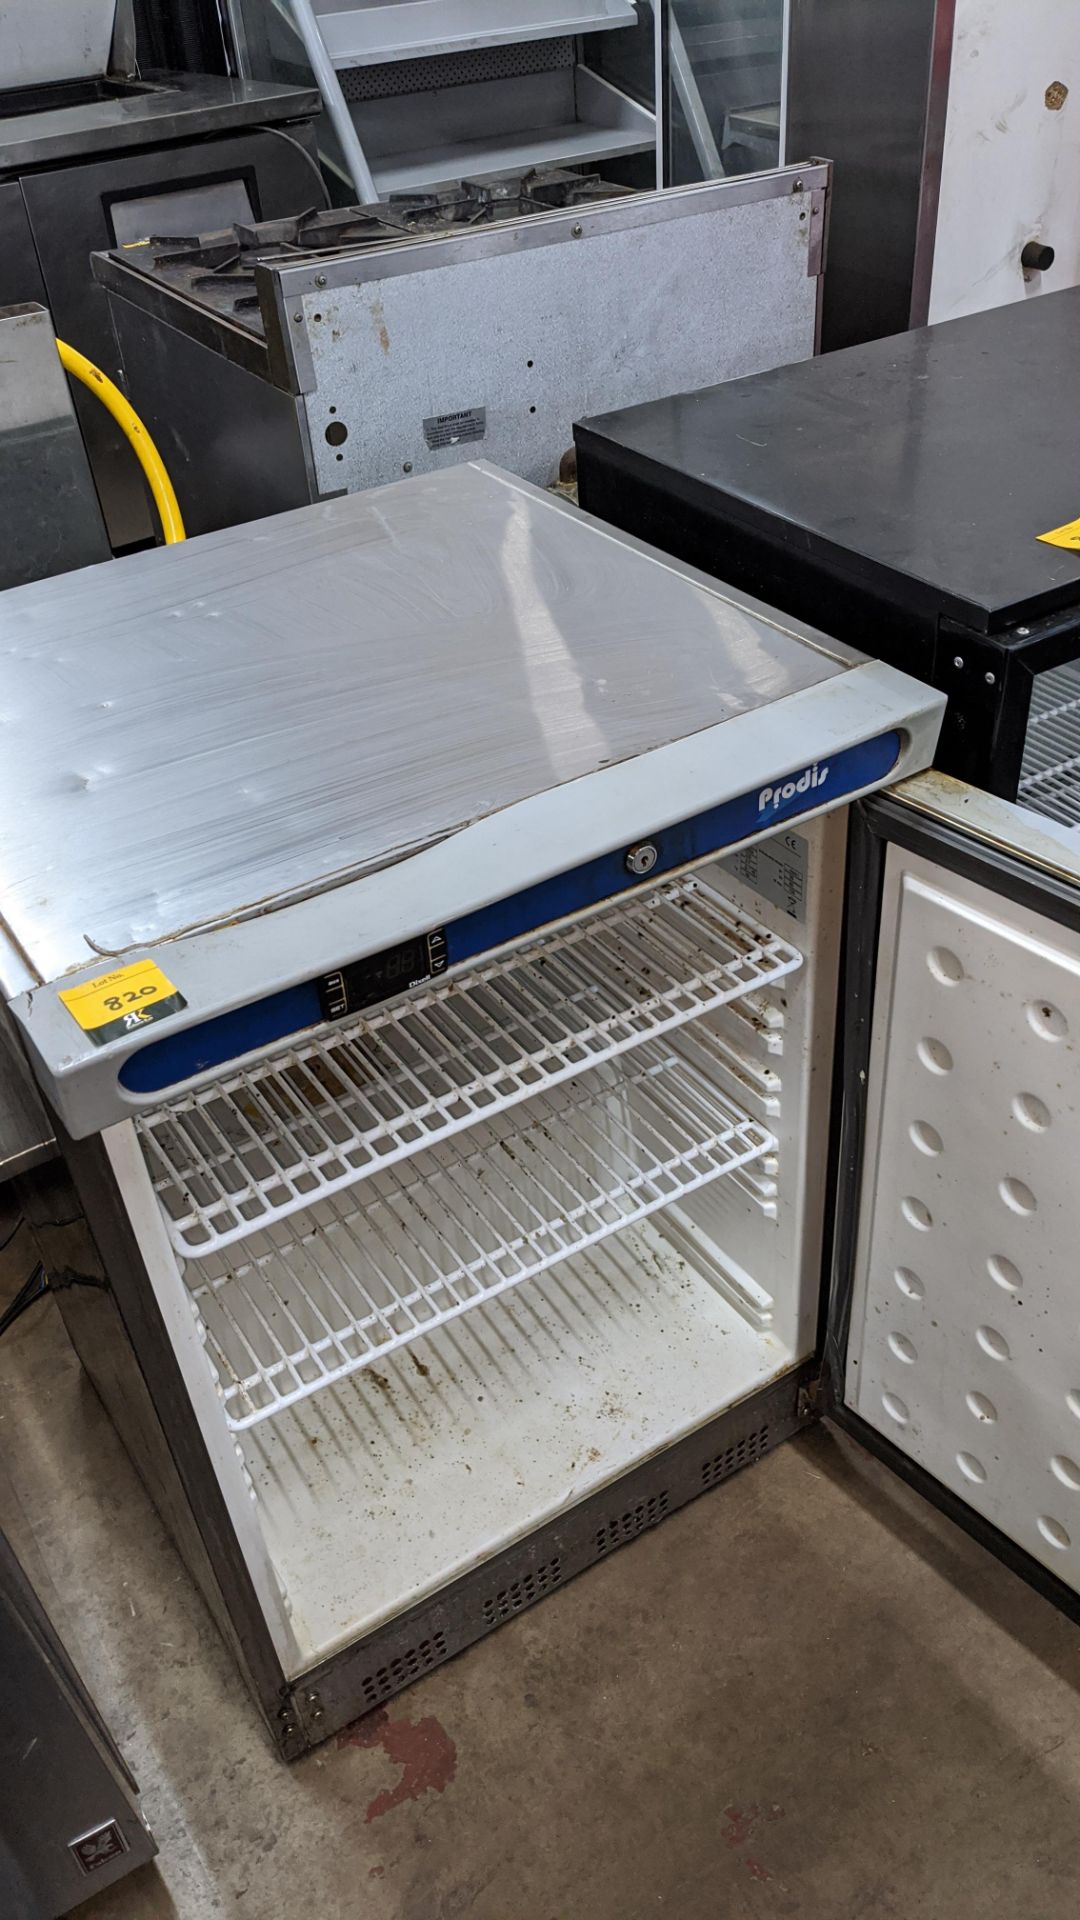 Prodis undercounter fridge model HC200RSS. IMPORTANT: Please remember goods successfully bid upon - Image 3 of 4